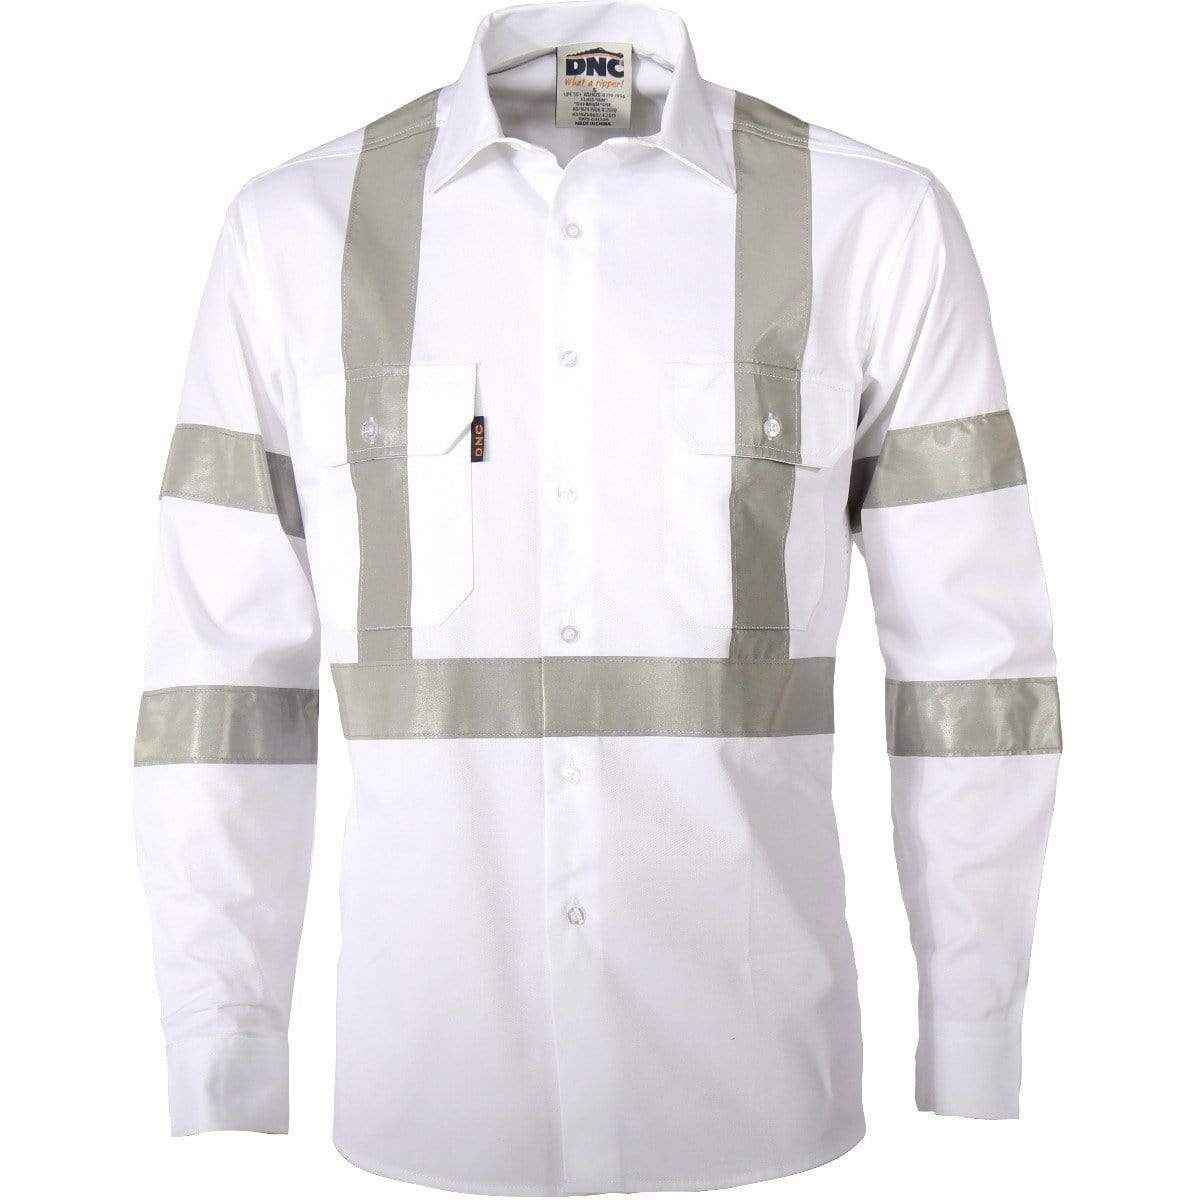 Dnc Workwear Rta Night Worker White Shirt With Csr R/tape - 3537 Work Wear DNC Workwear White XS 